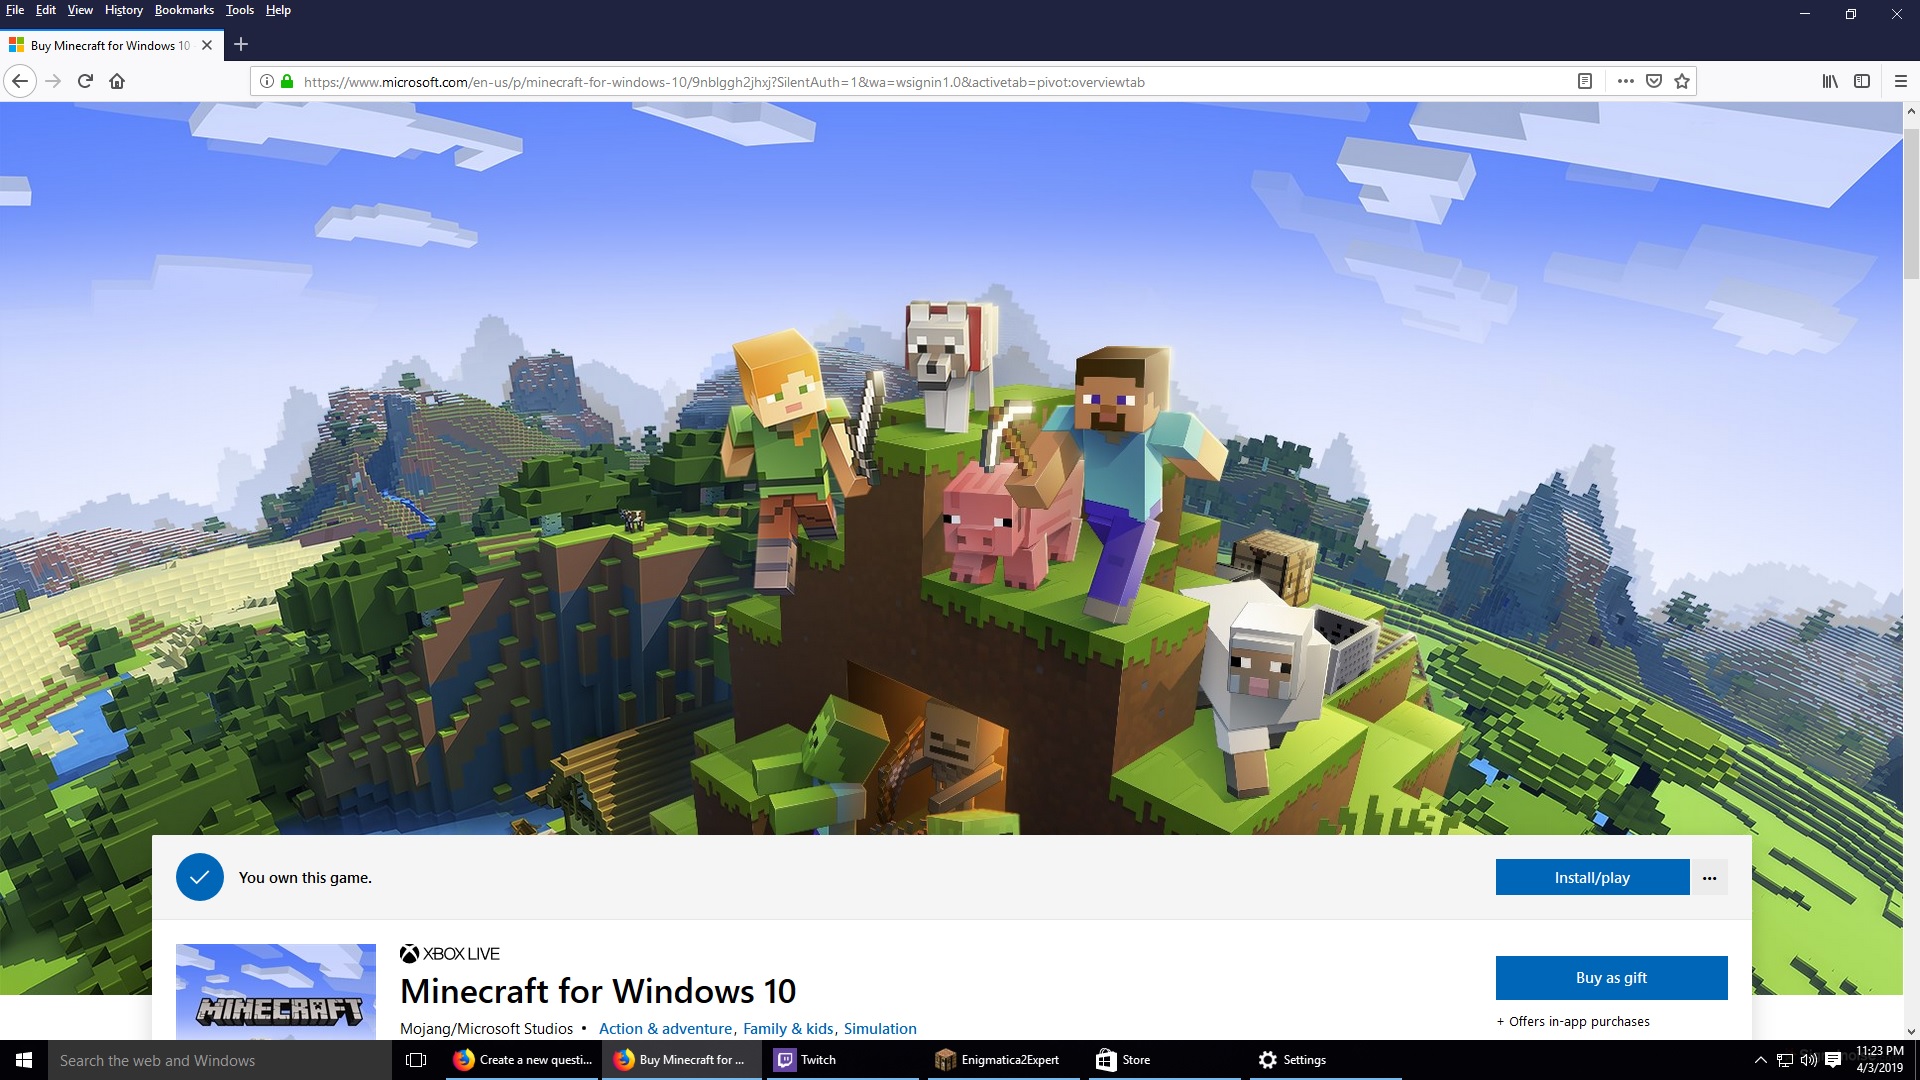 Minecraft Windows 10 edition won't download a380fed0-1a1d-4d23-8376-98fc0566d54d?upload=true.jpg